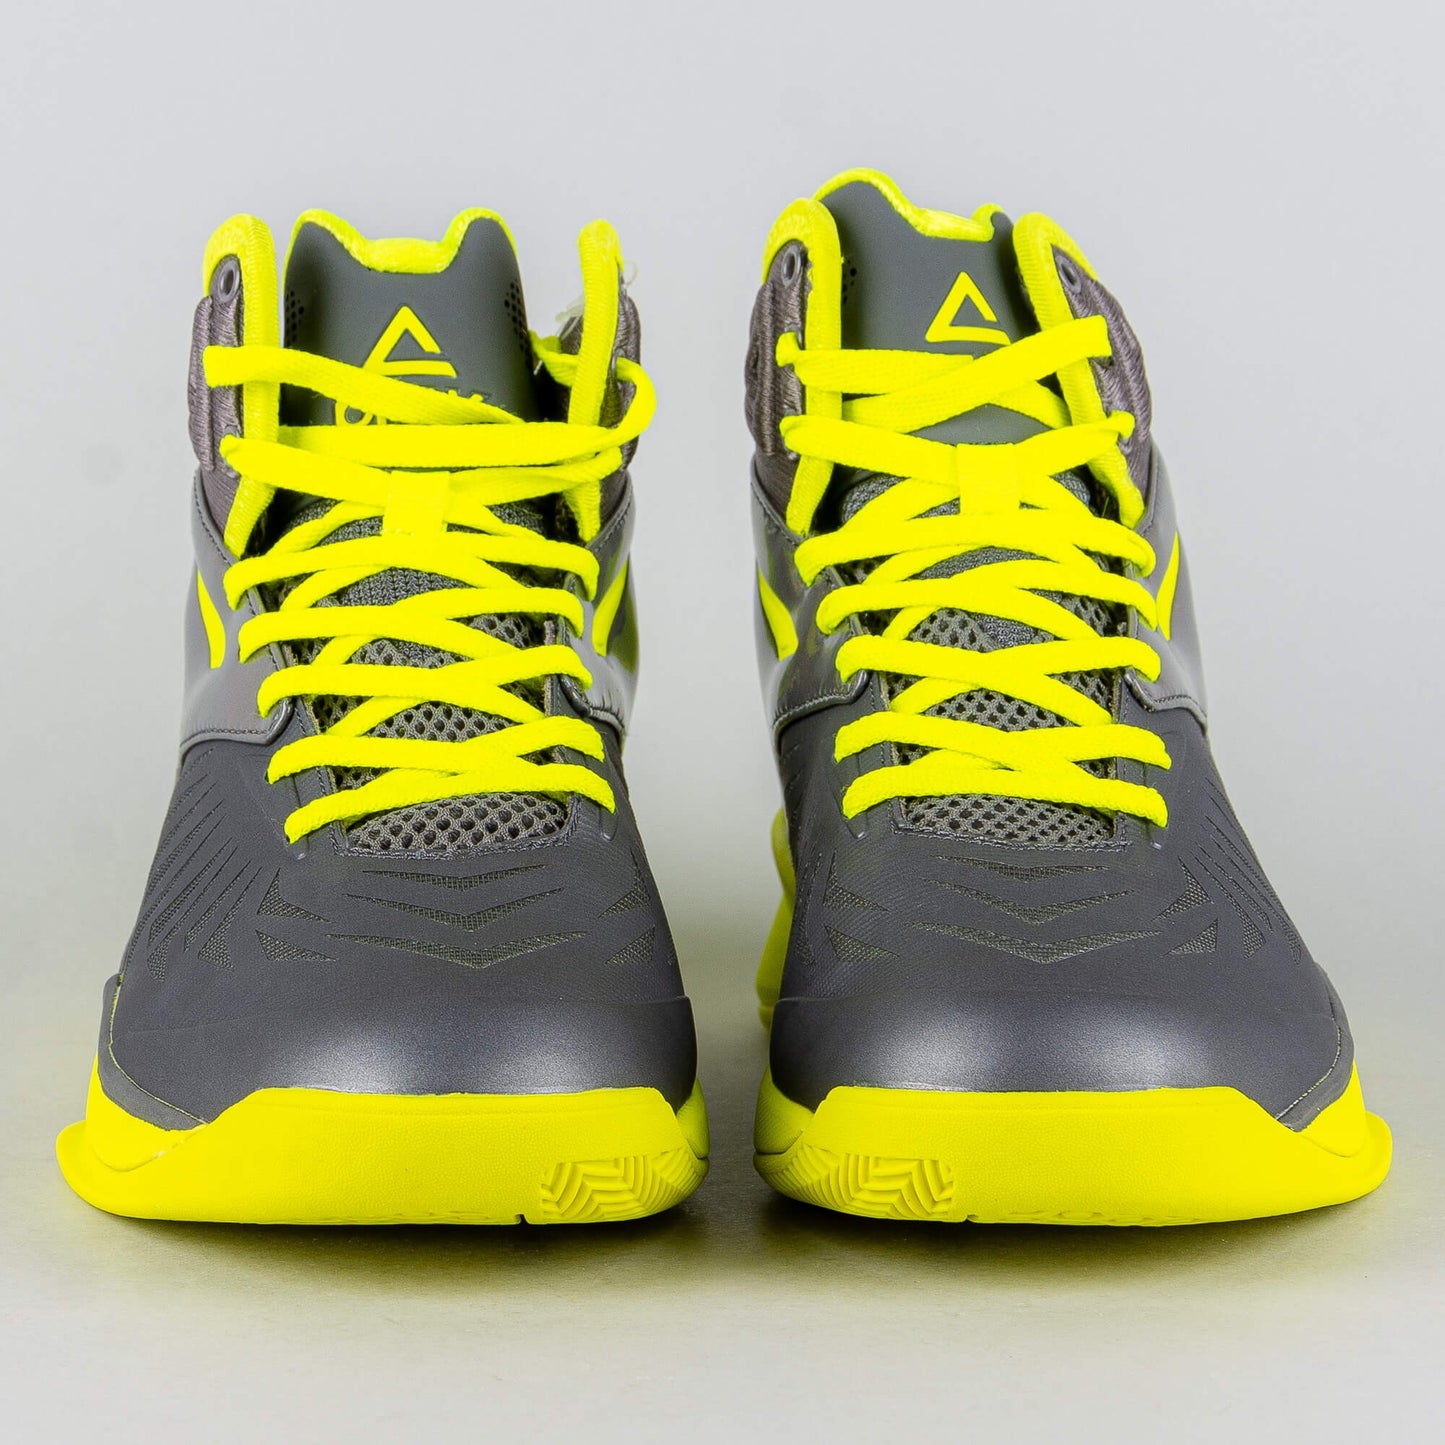 Peak Basketball Shoes Soaring II-5 Fiba Castle Cement/Fluorescent Yellow